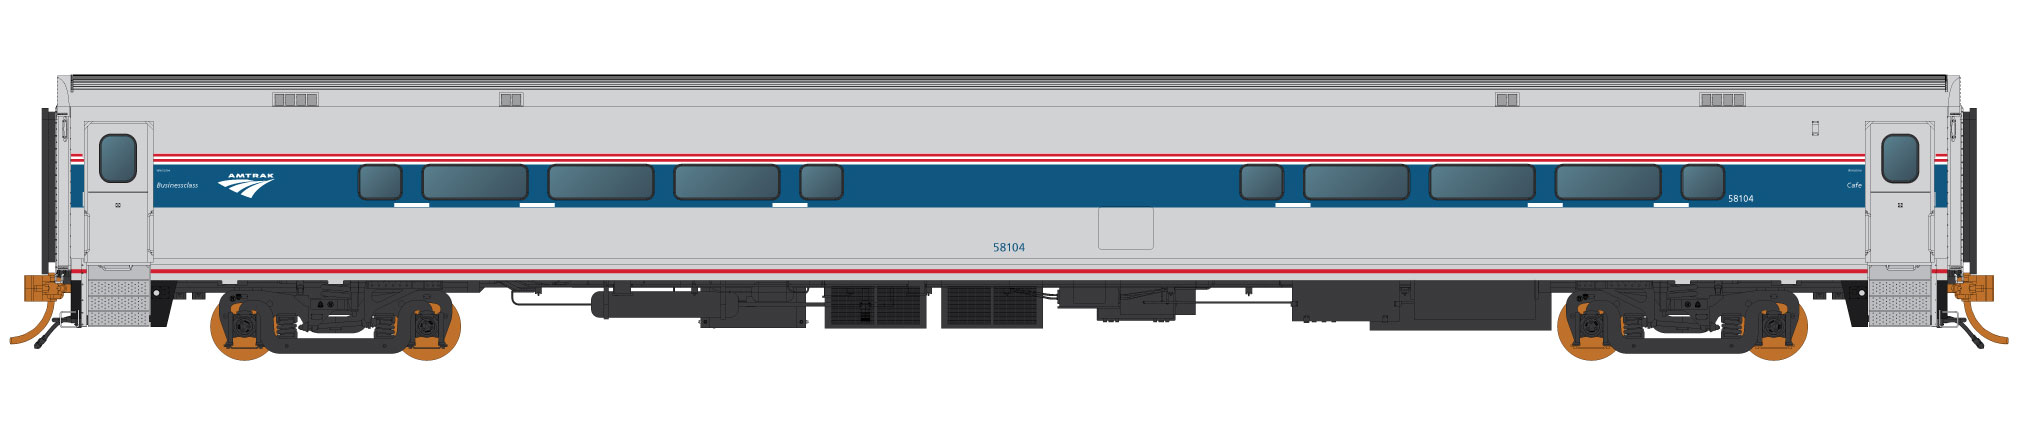 Rapido Trains 128035 Horizon Club-Dinette PH VI, Amtrak - The Scuderia 46